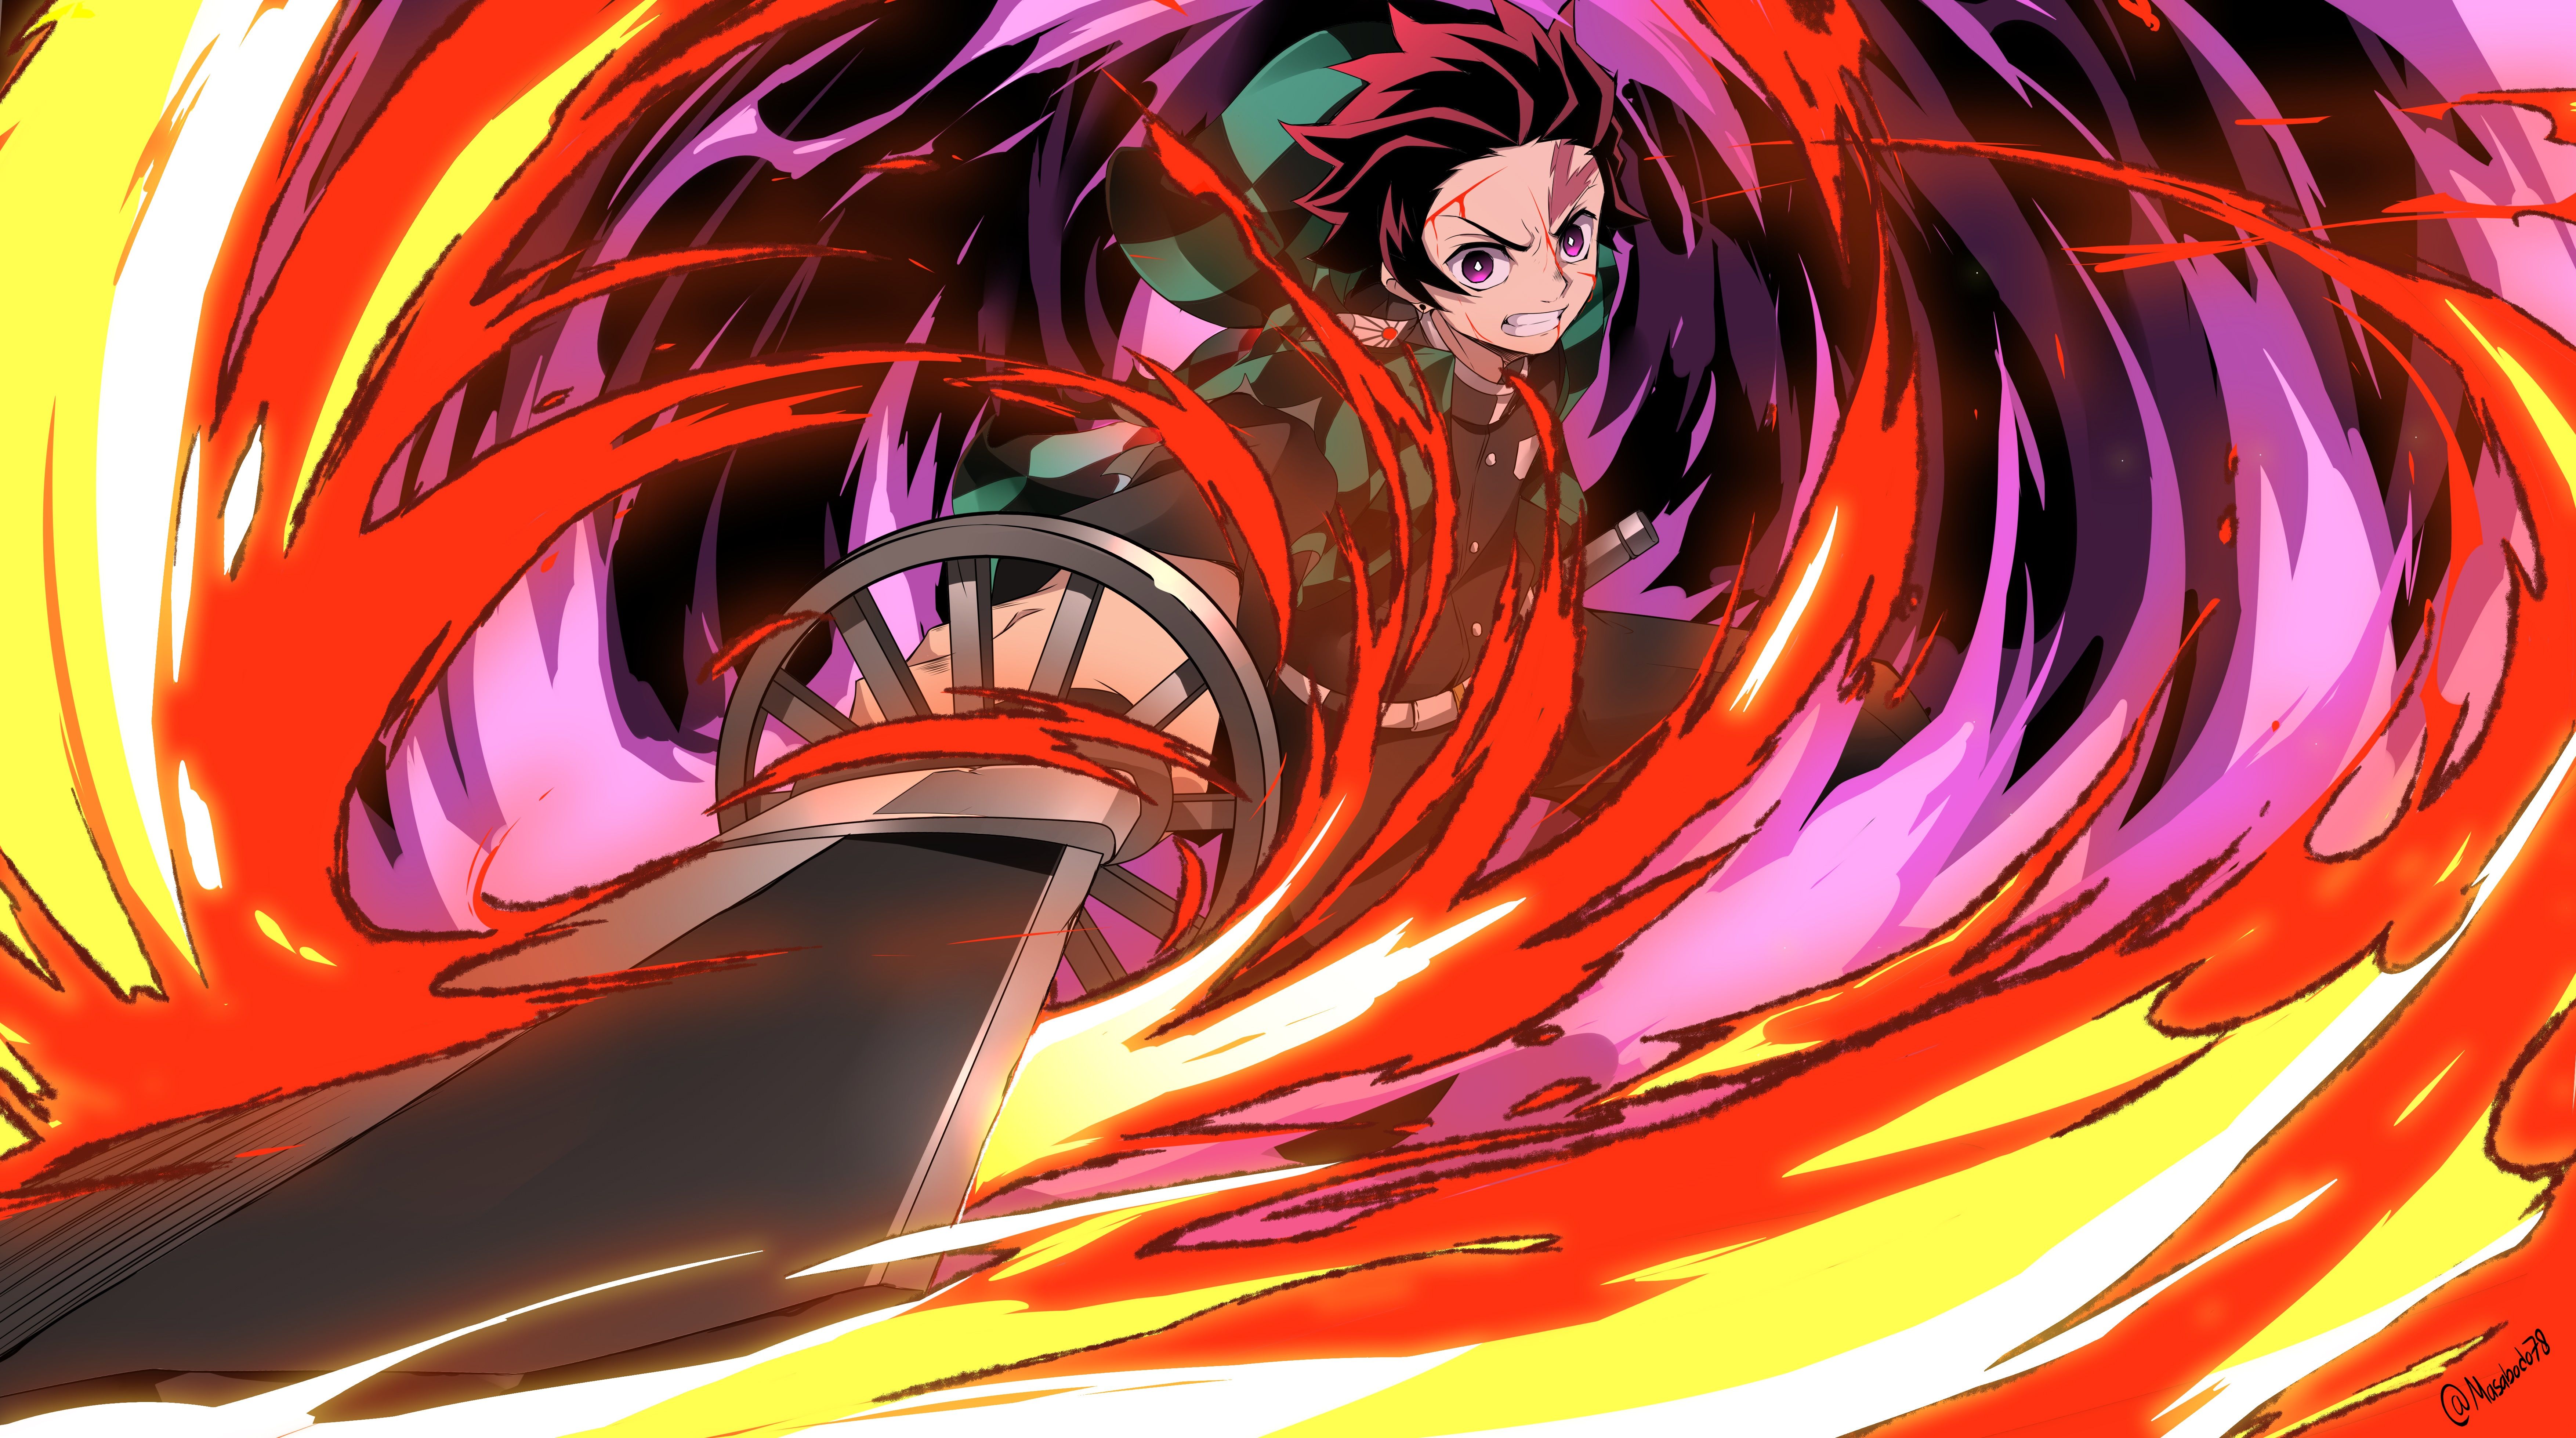 4K Demon Slayer: Kimetsu no Yaiba Wallpaper and Background Image